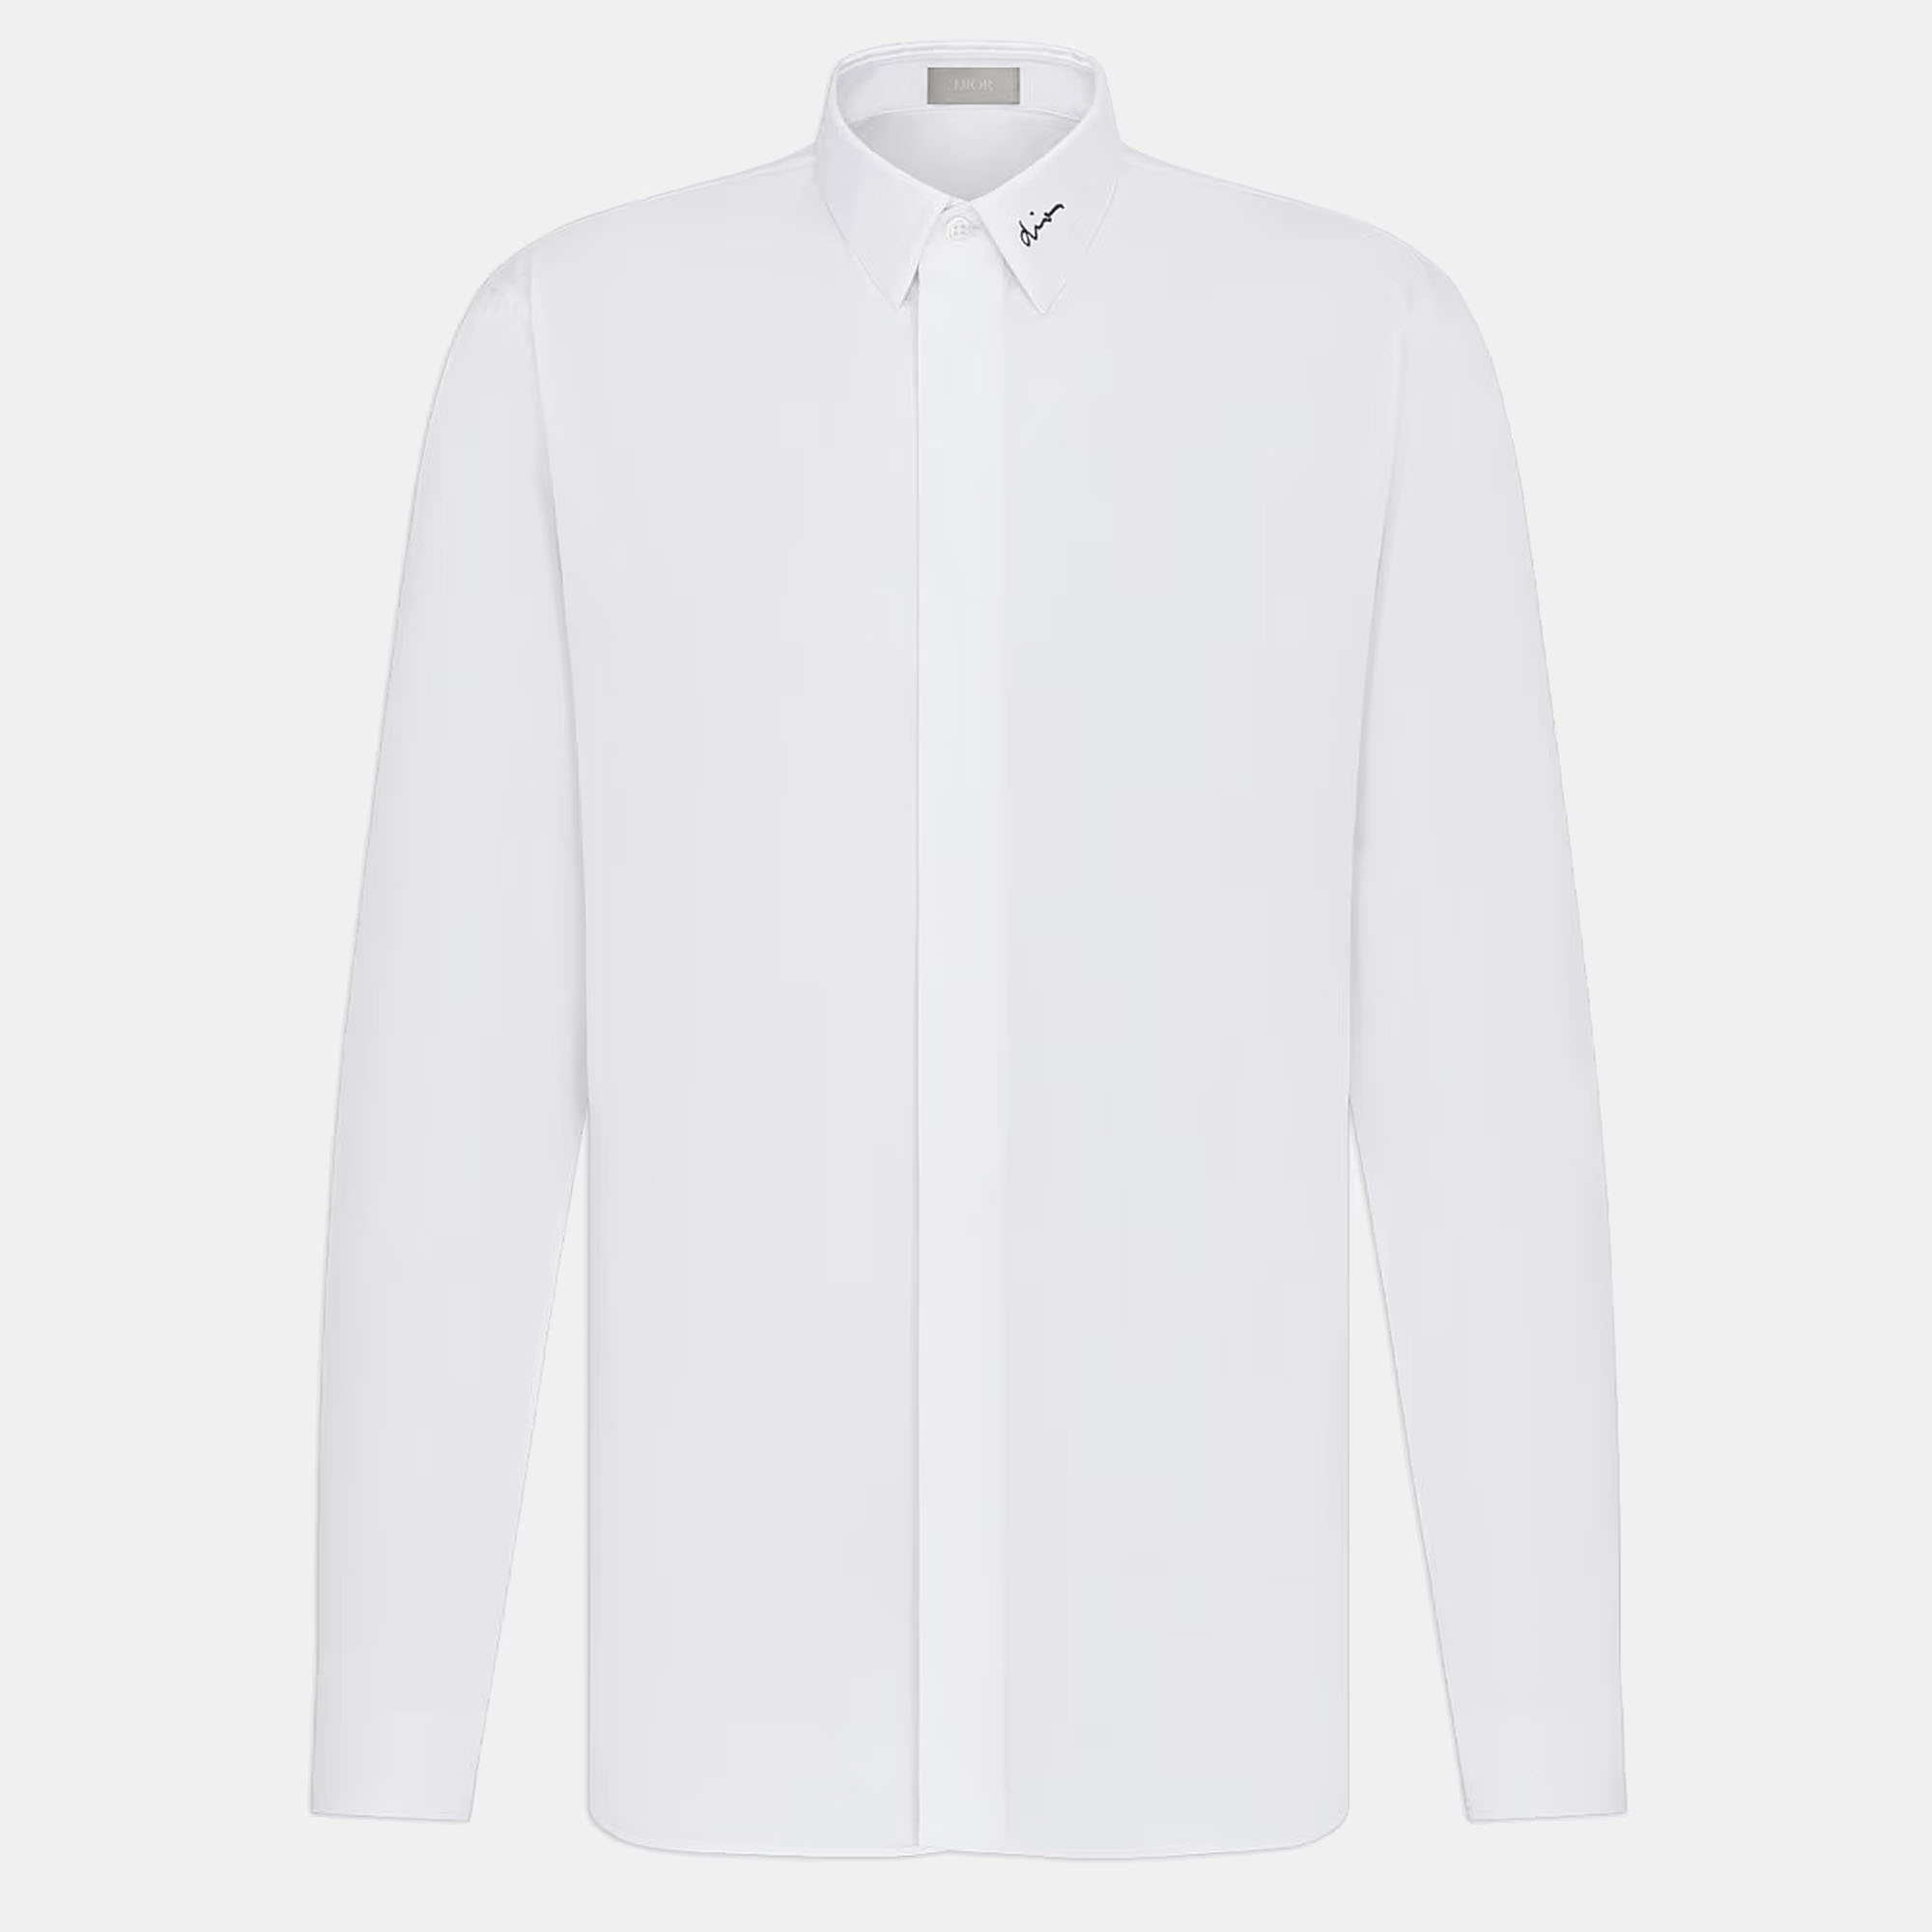 

Dior Homme White Poplin Long Sleeve Shirt S